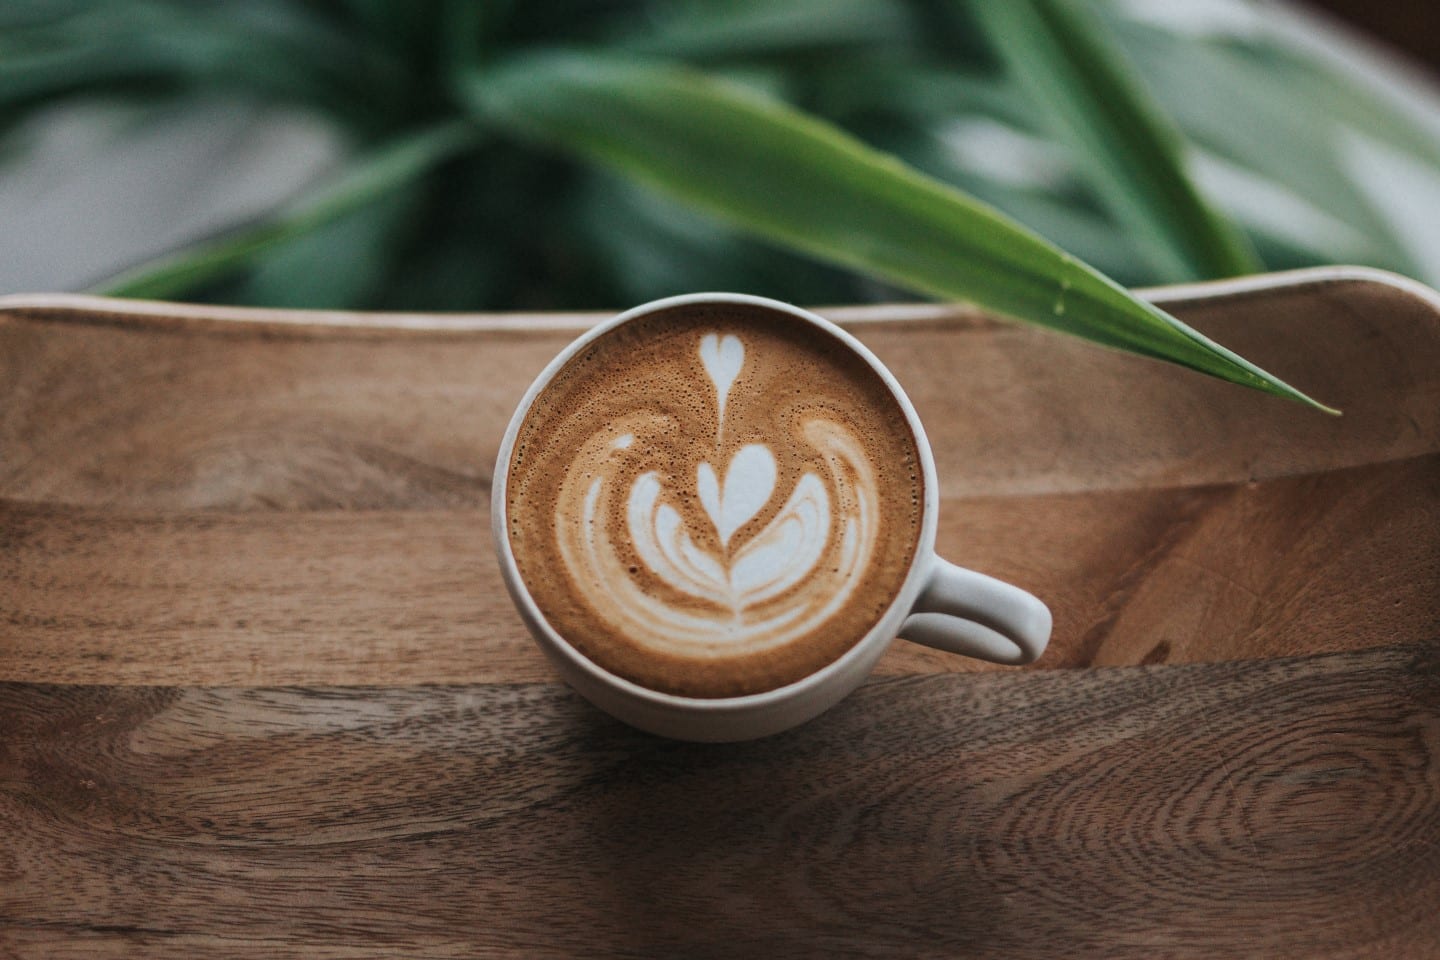 Friendship Market - Cafe latte with milk-foam artwork on a wooden tabletop